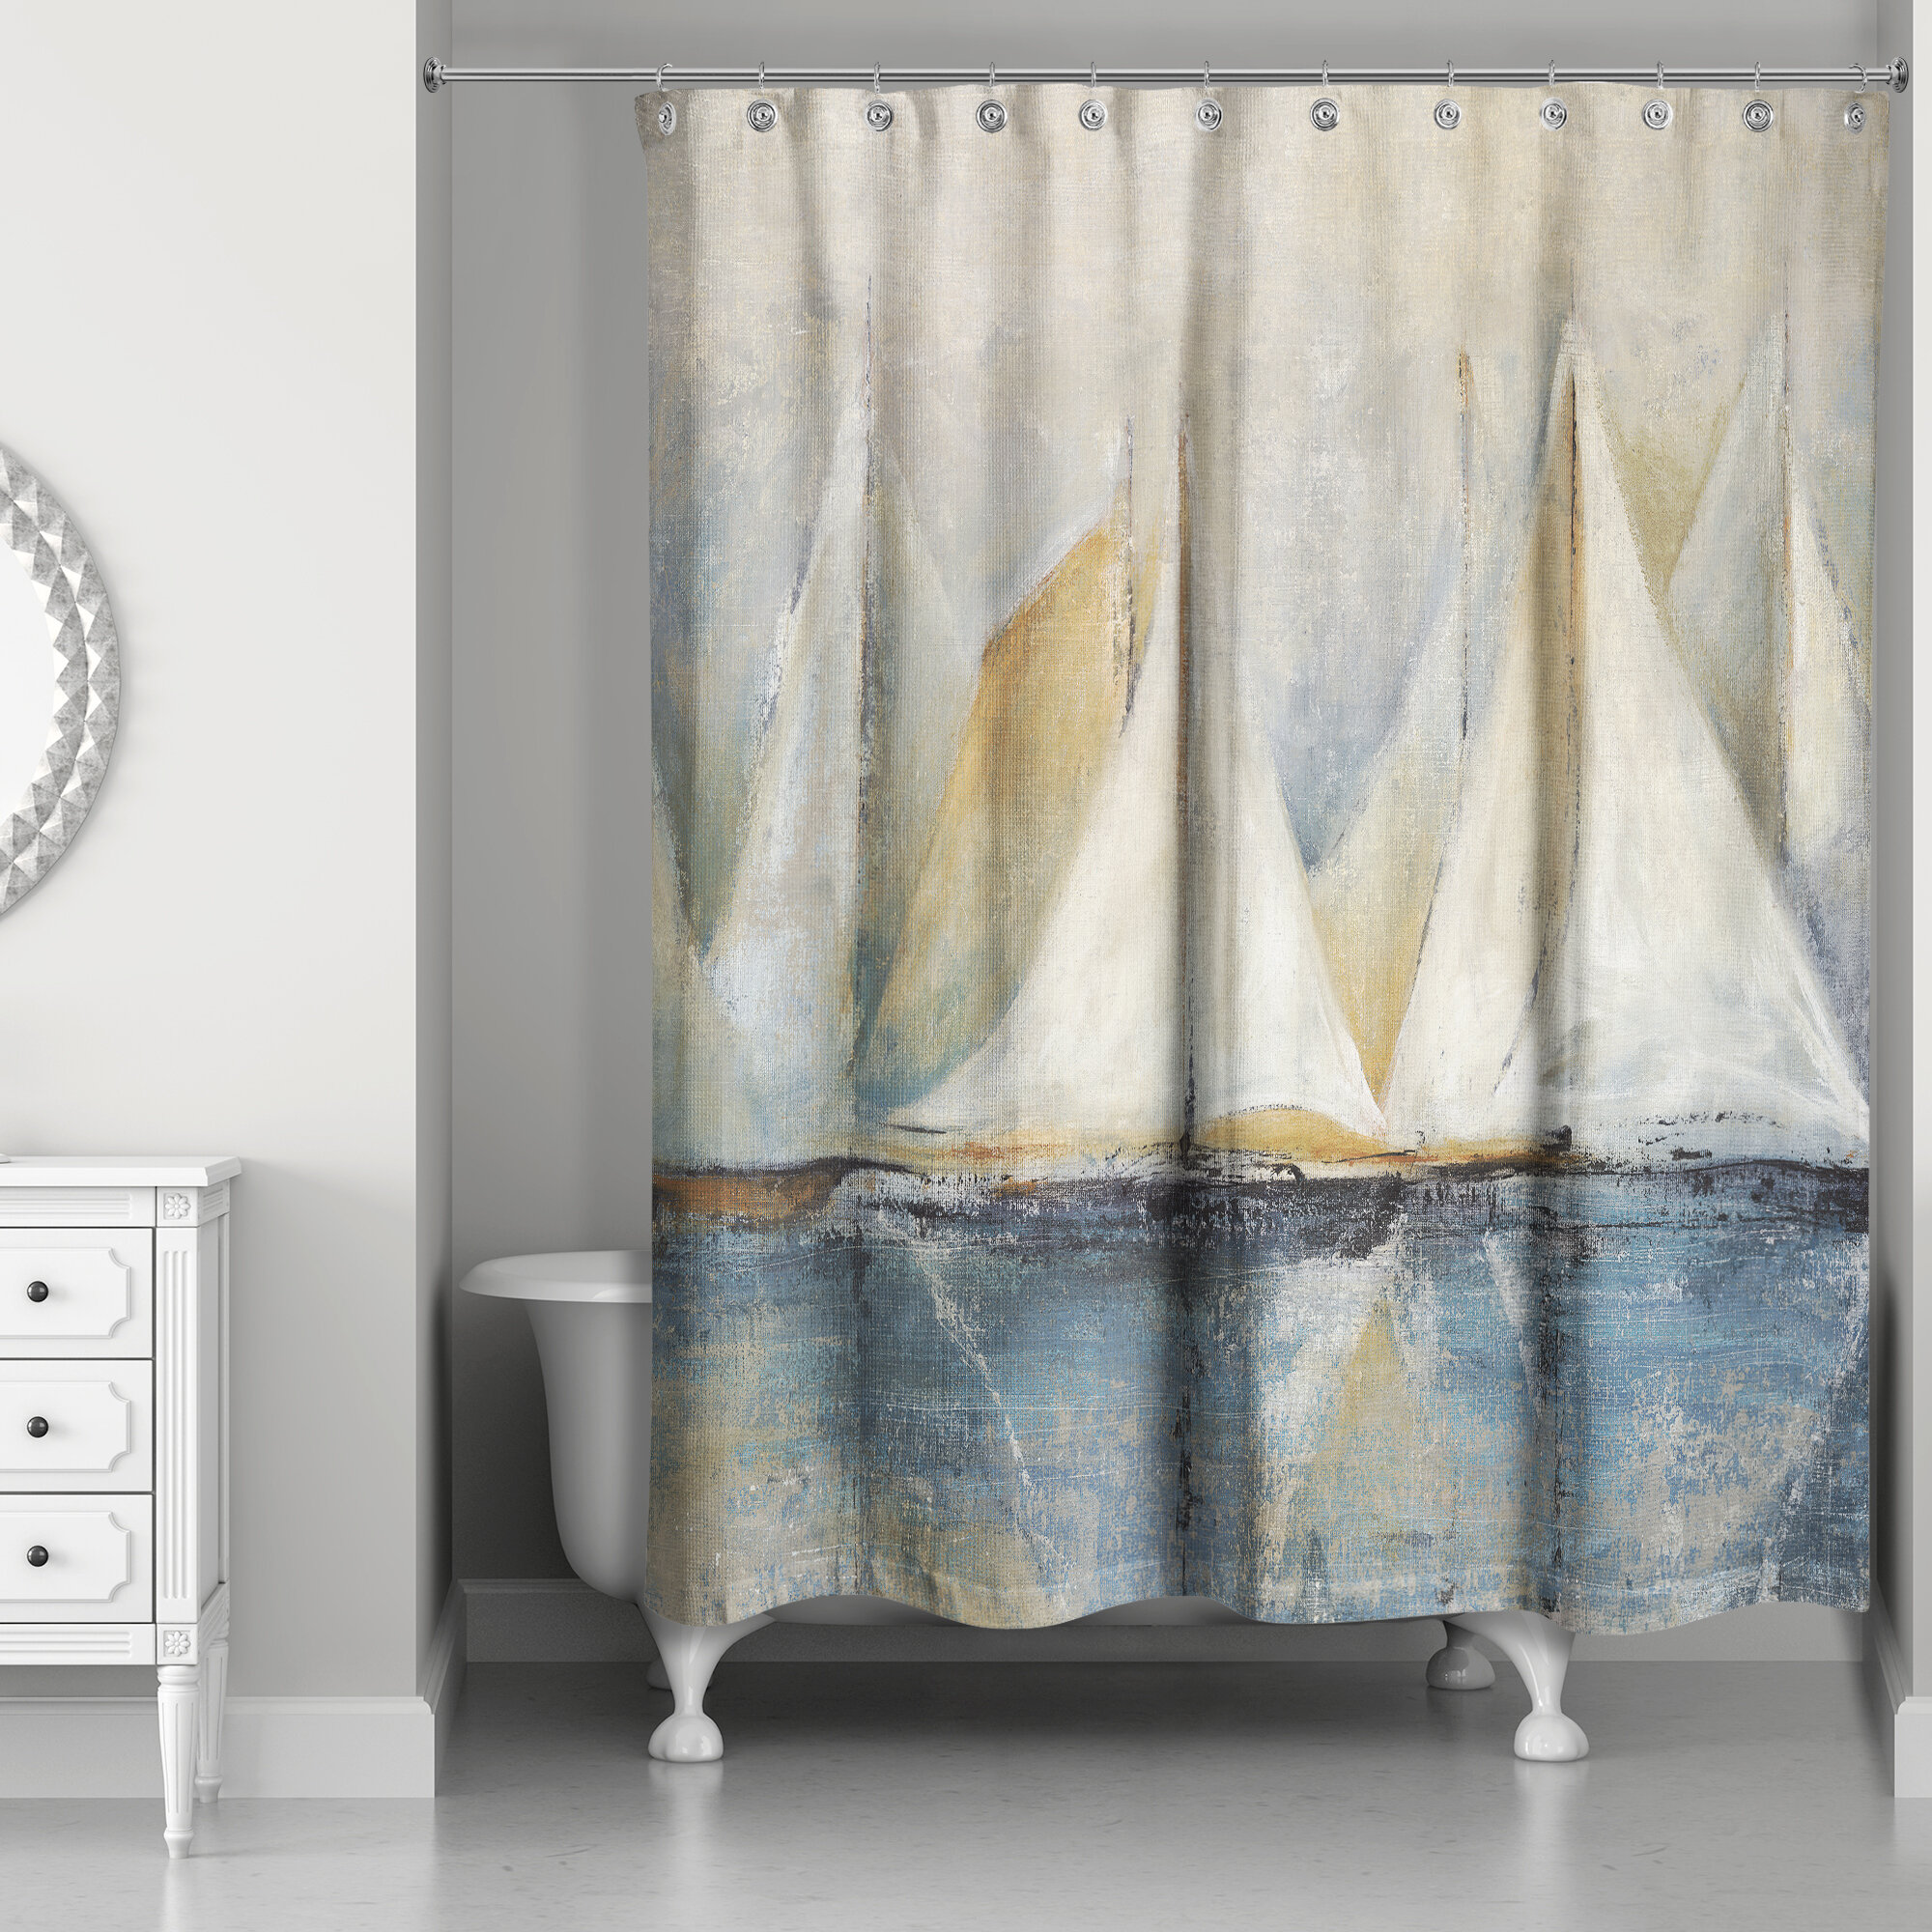 Shower Curtain or Liner White Waterproof Fabric PEVA Bathroom Curtains  Ocean Theme Bath Curtain Liners with Curtain Hooks (32 x 72, Blue  Seashells